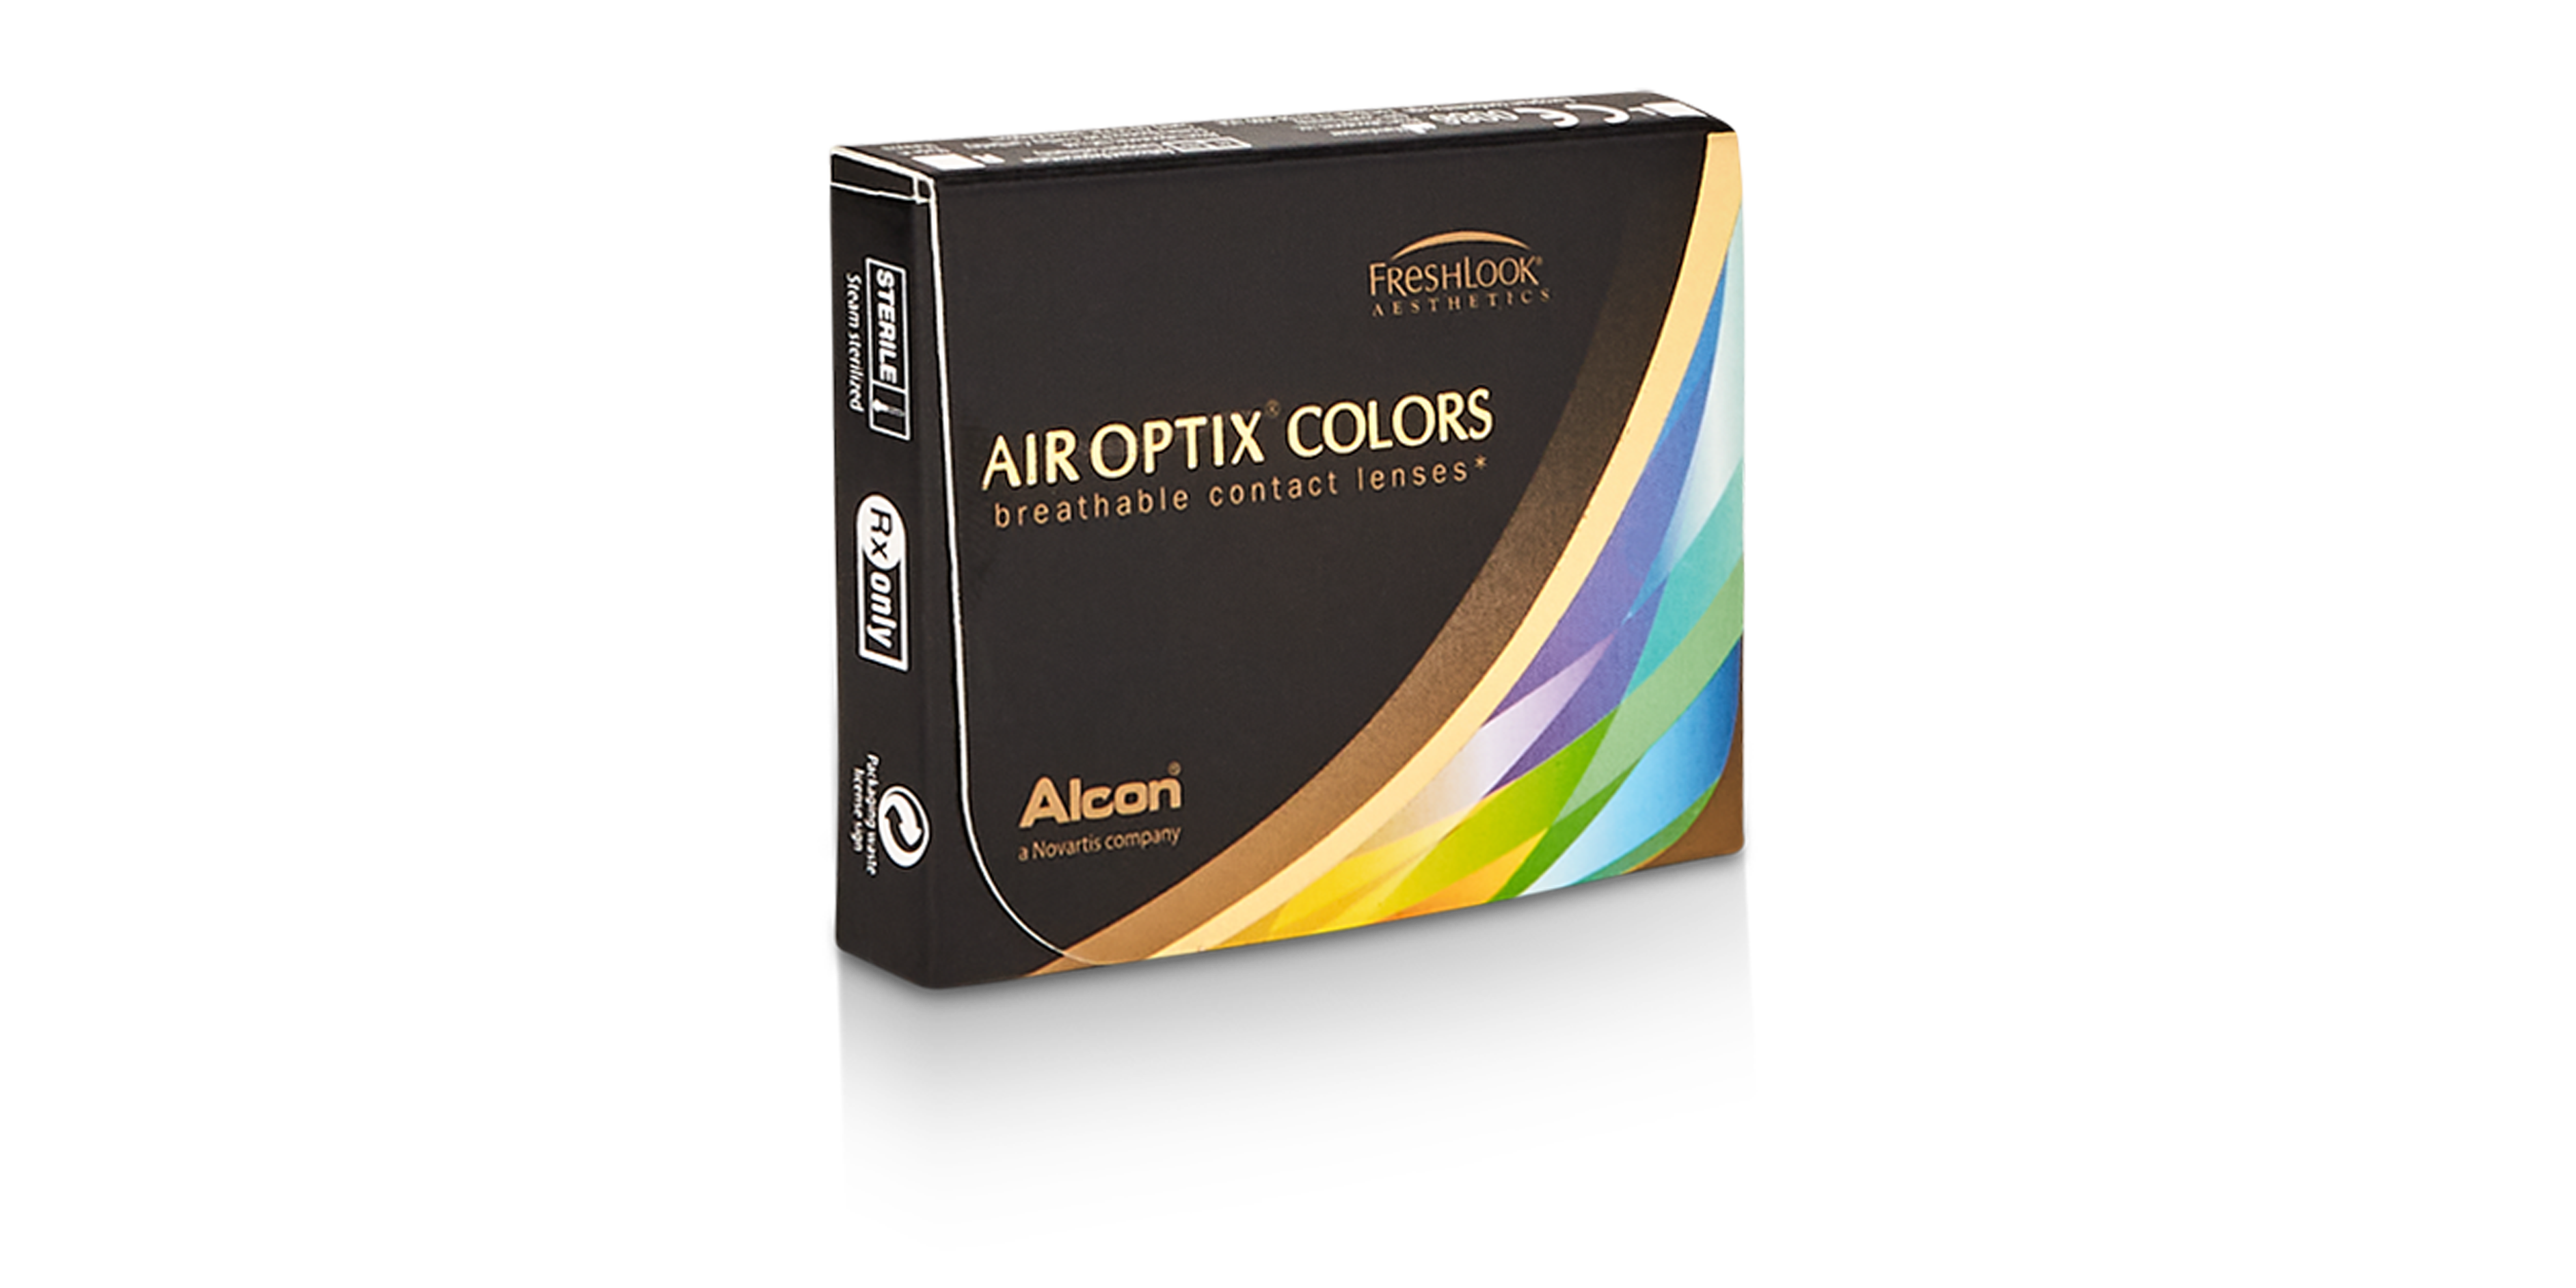 Air Optix Colors, 2 pack contact lenses